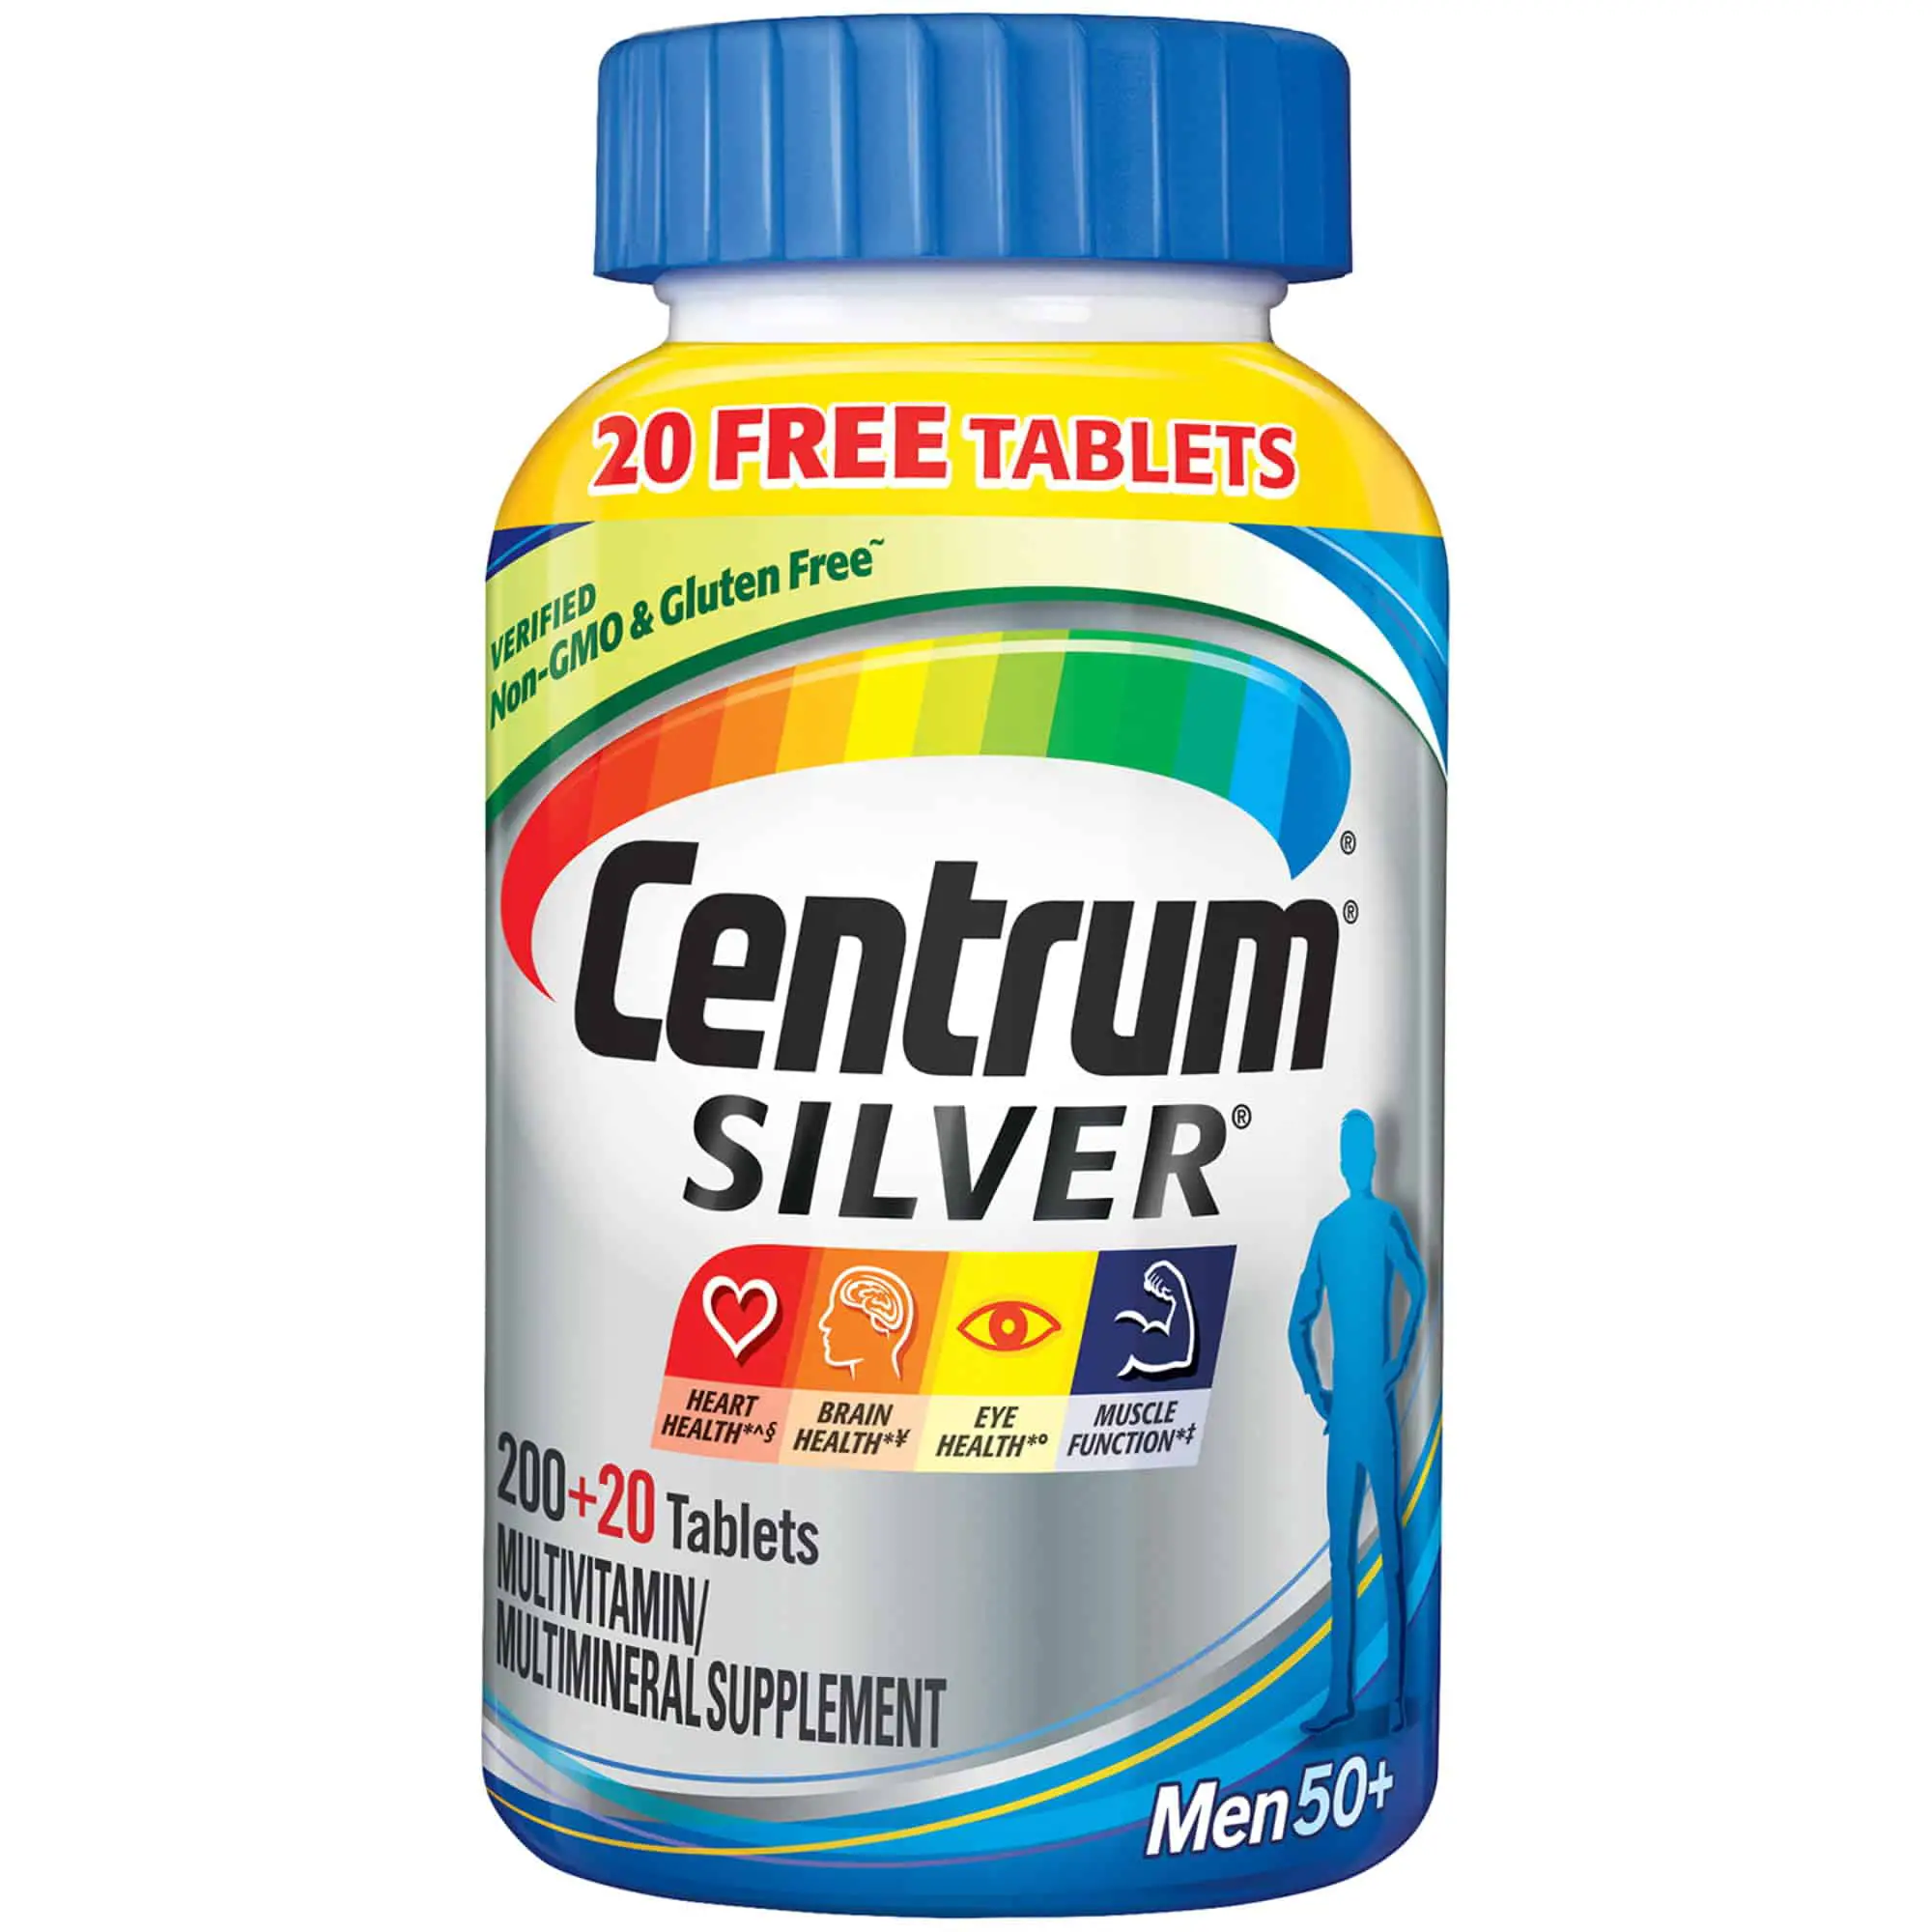 Centrum Silver Multivitamins for Men Over 50, Multimineral Supplement ...